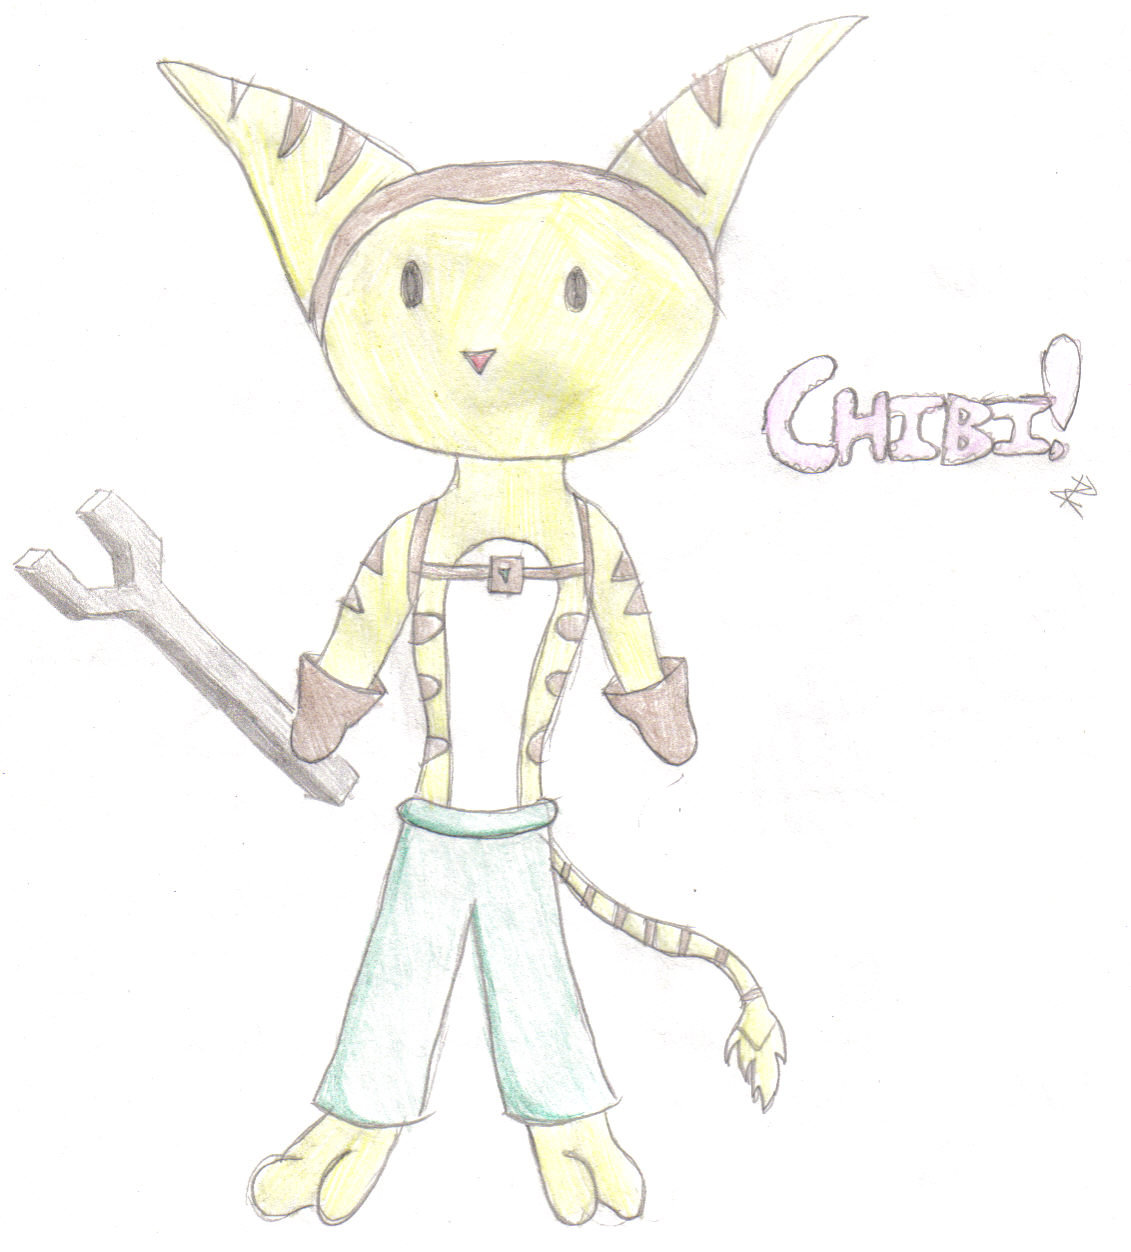 Chibi Ratchet by jak-n-daxter203